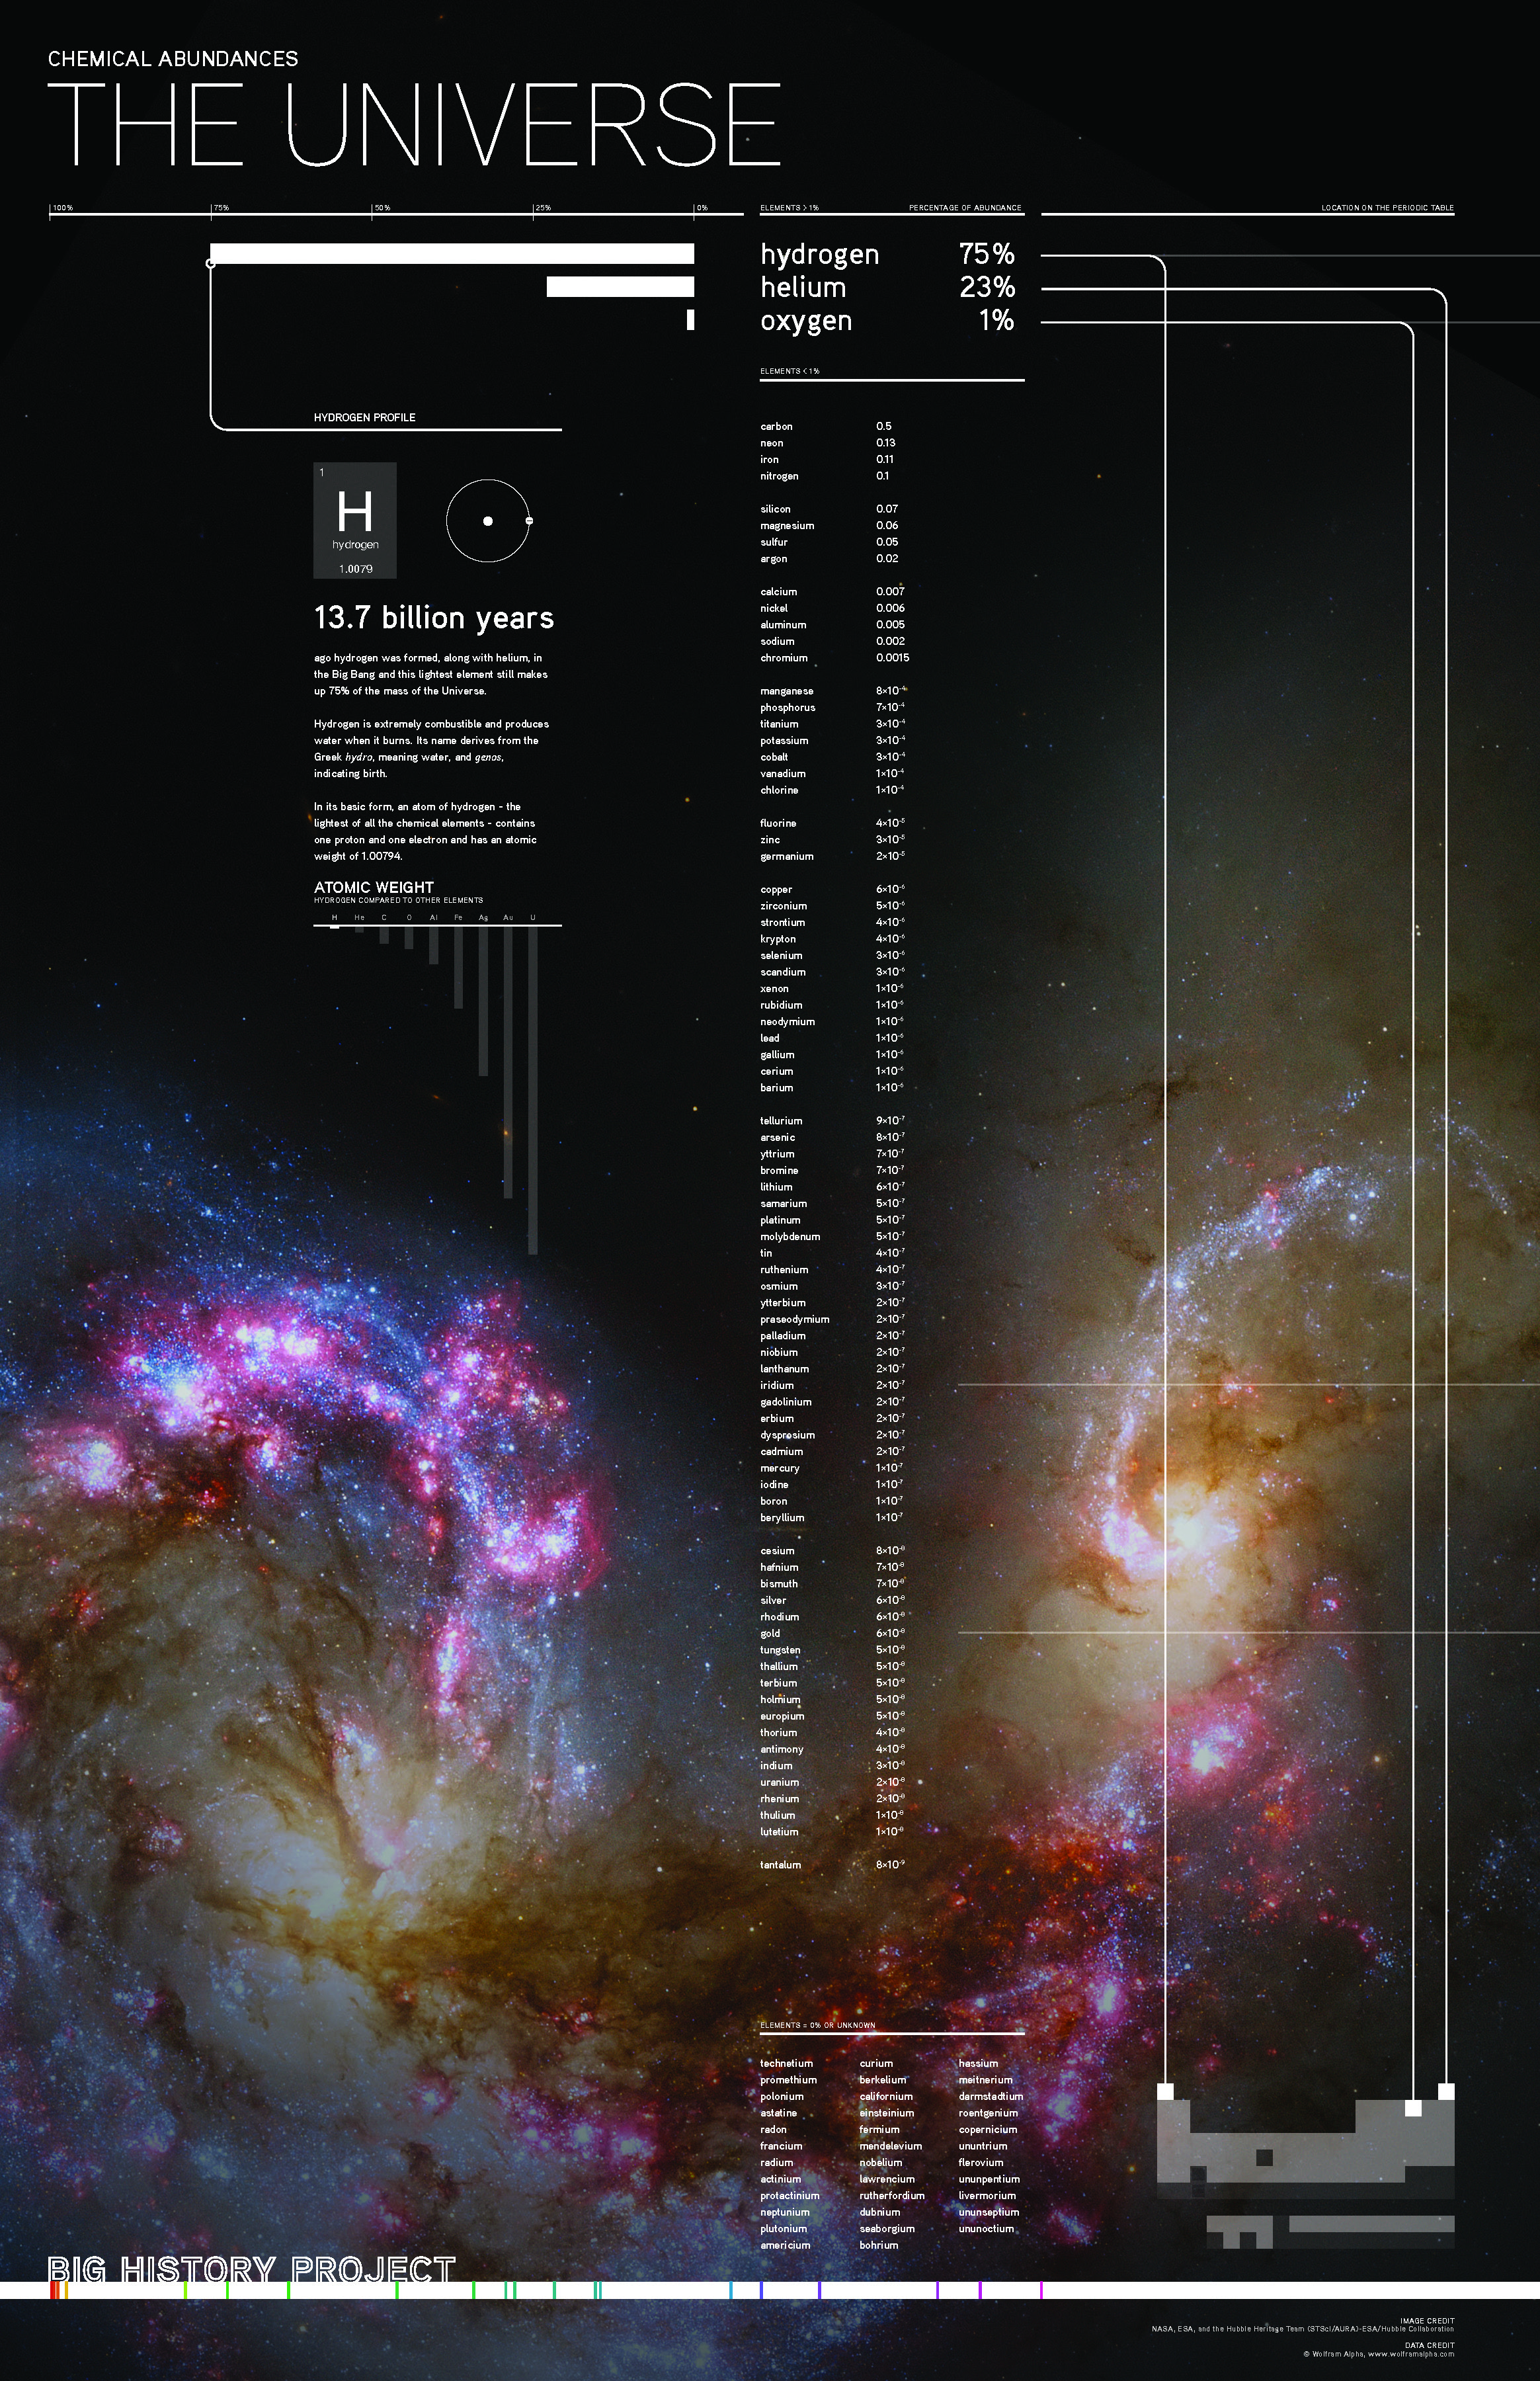 Chemical Abundances - The Universe infographic